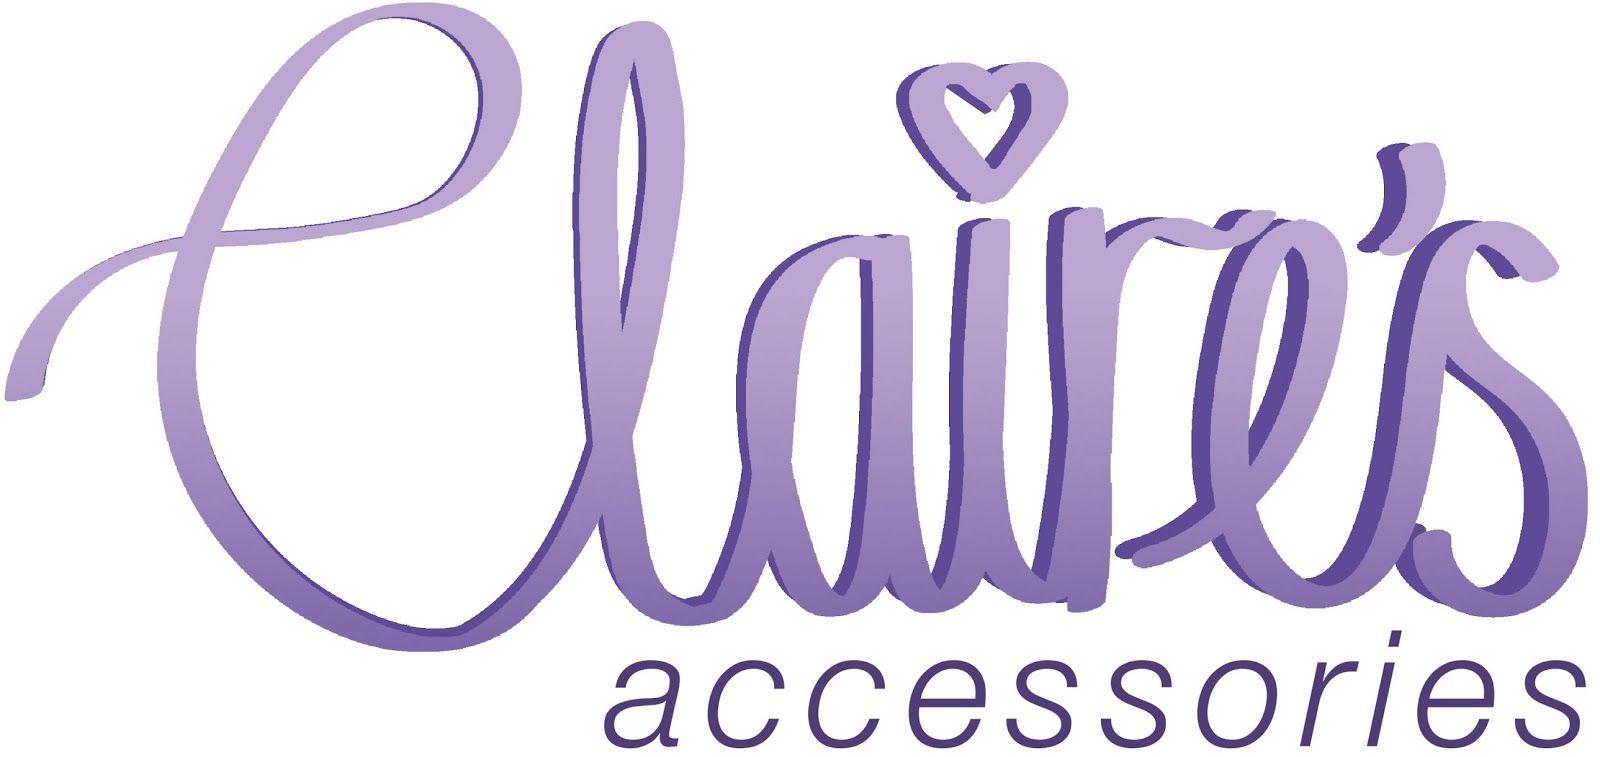 Claire Logo - Studio Practice: Logotype - Claire's Accessories